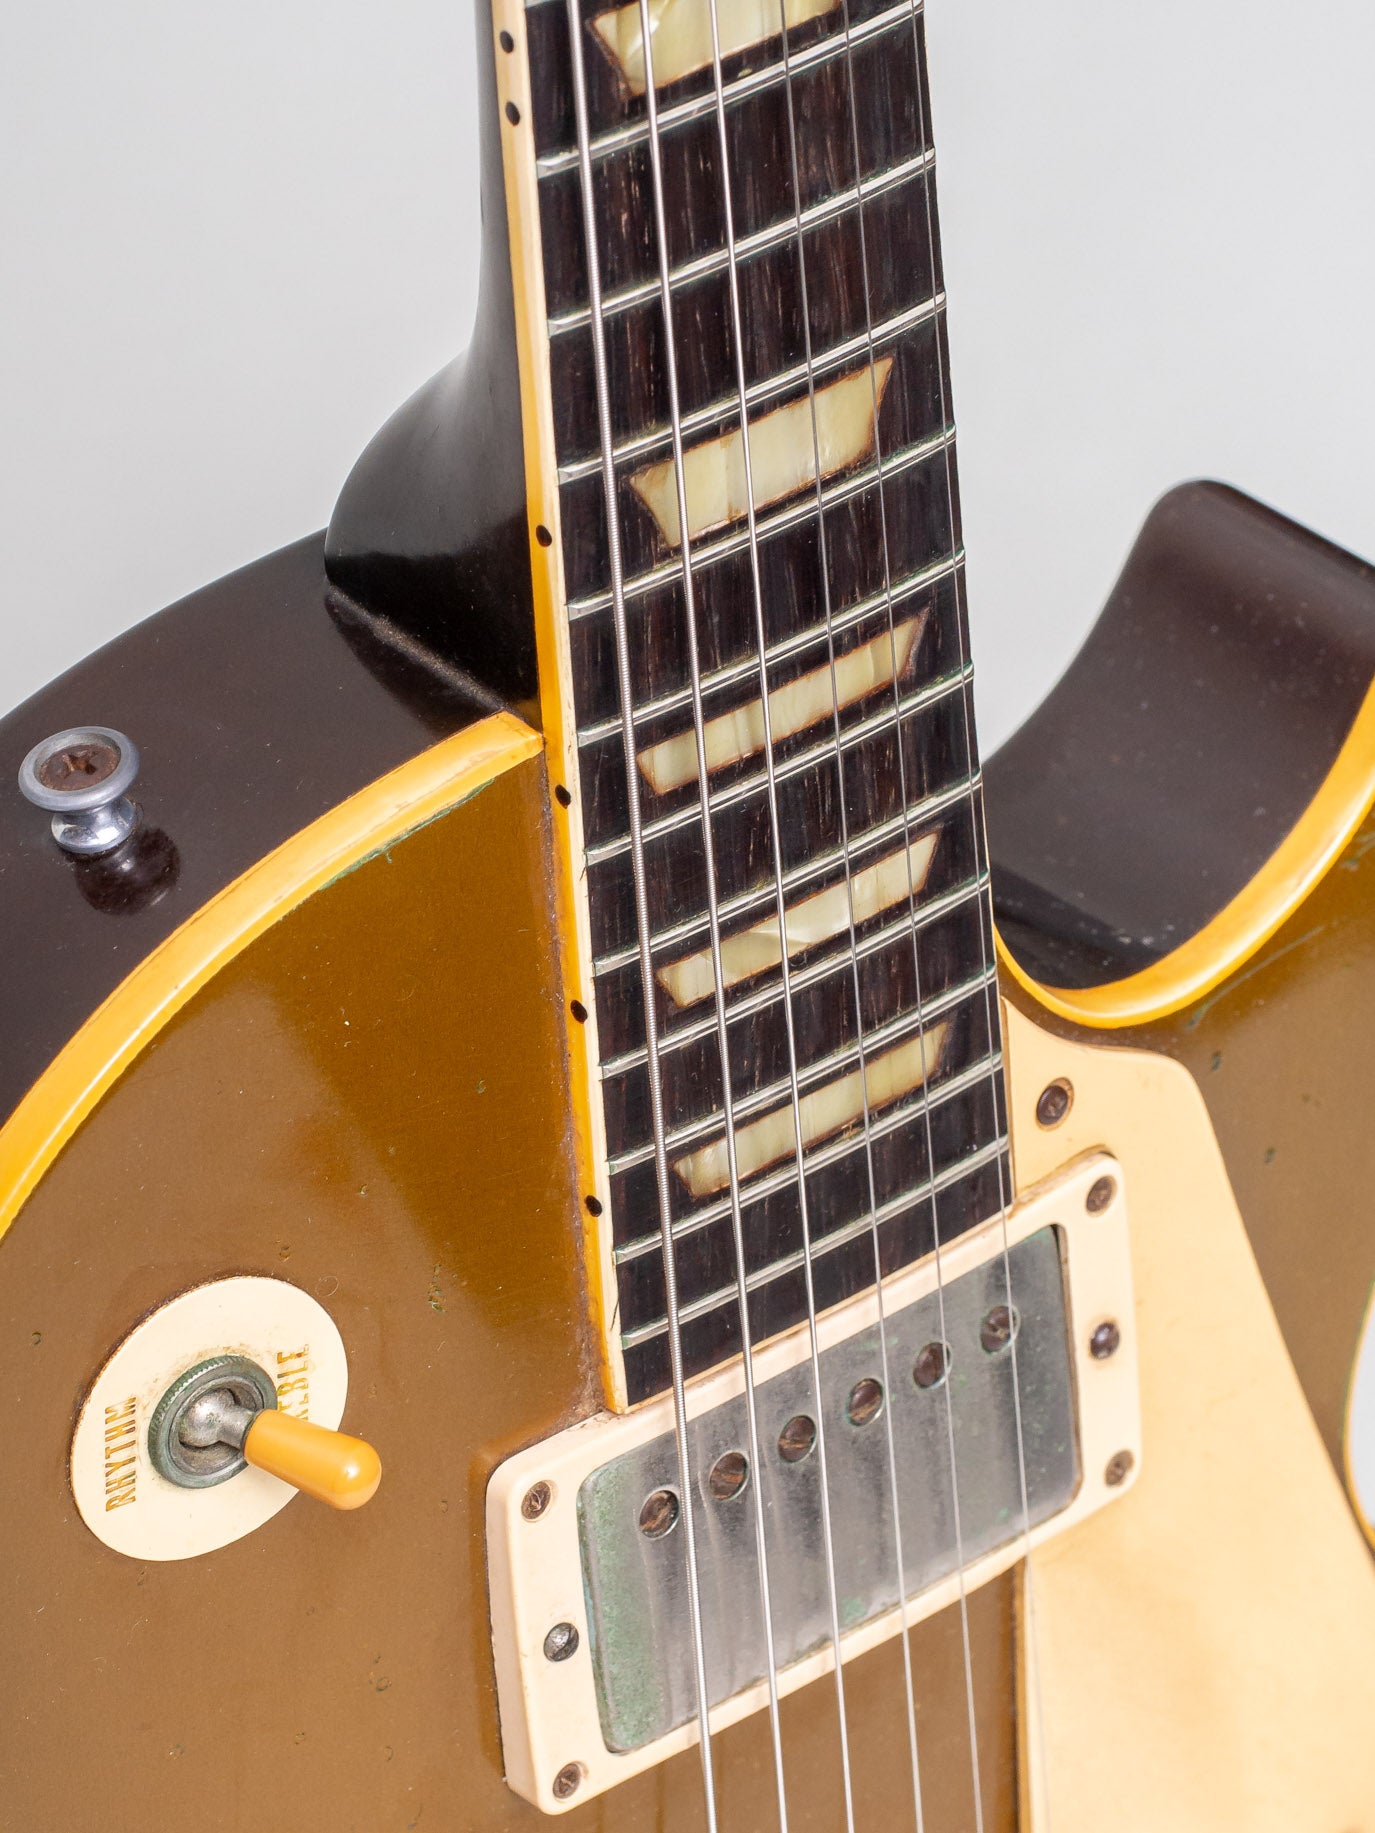 1958 Gibson Les Paul Goldtop